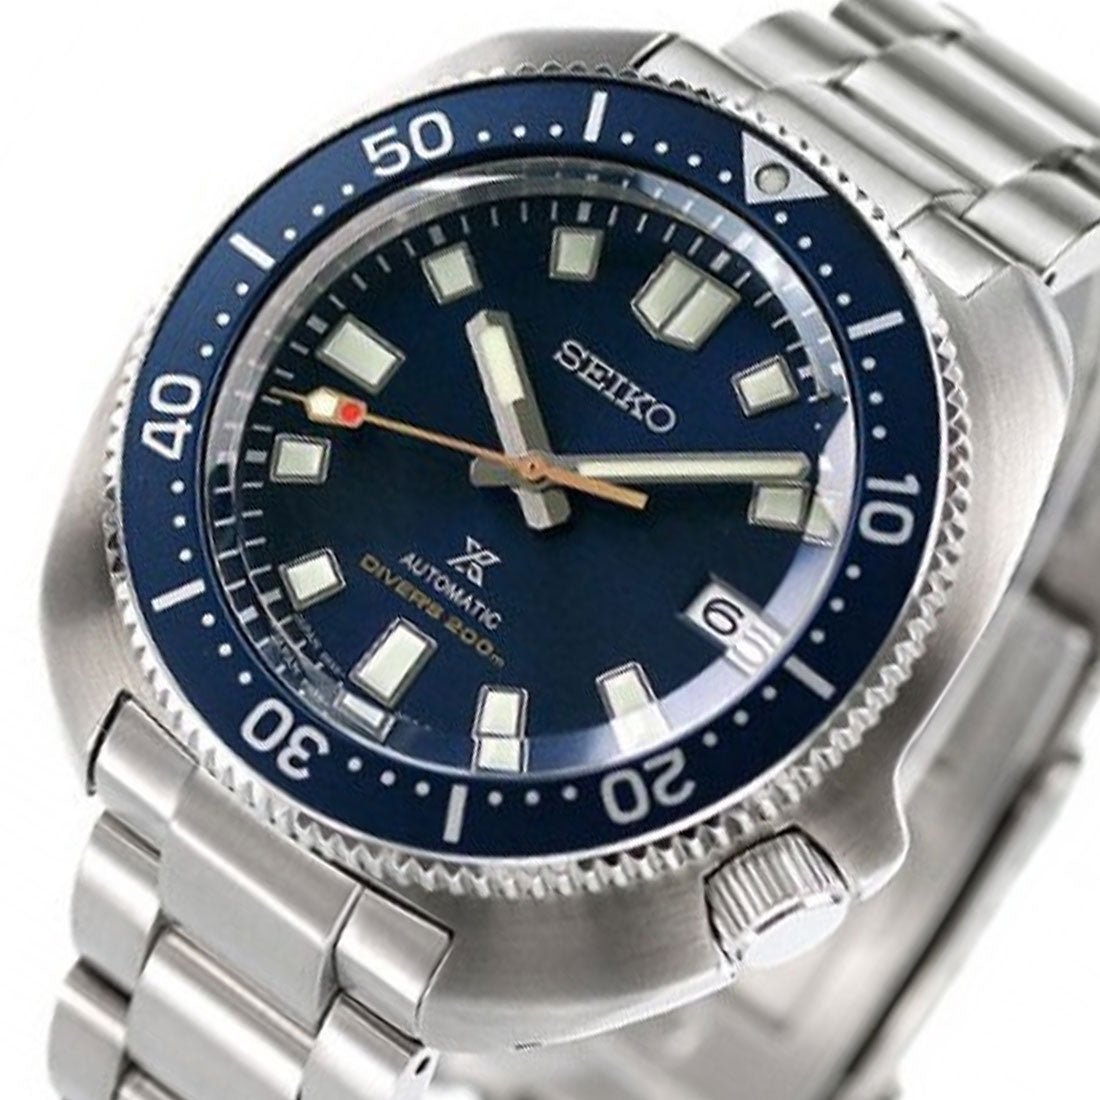 Seiko JDM Anniversary SBDC123 Prospex Limited Edition Watch -Seiko